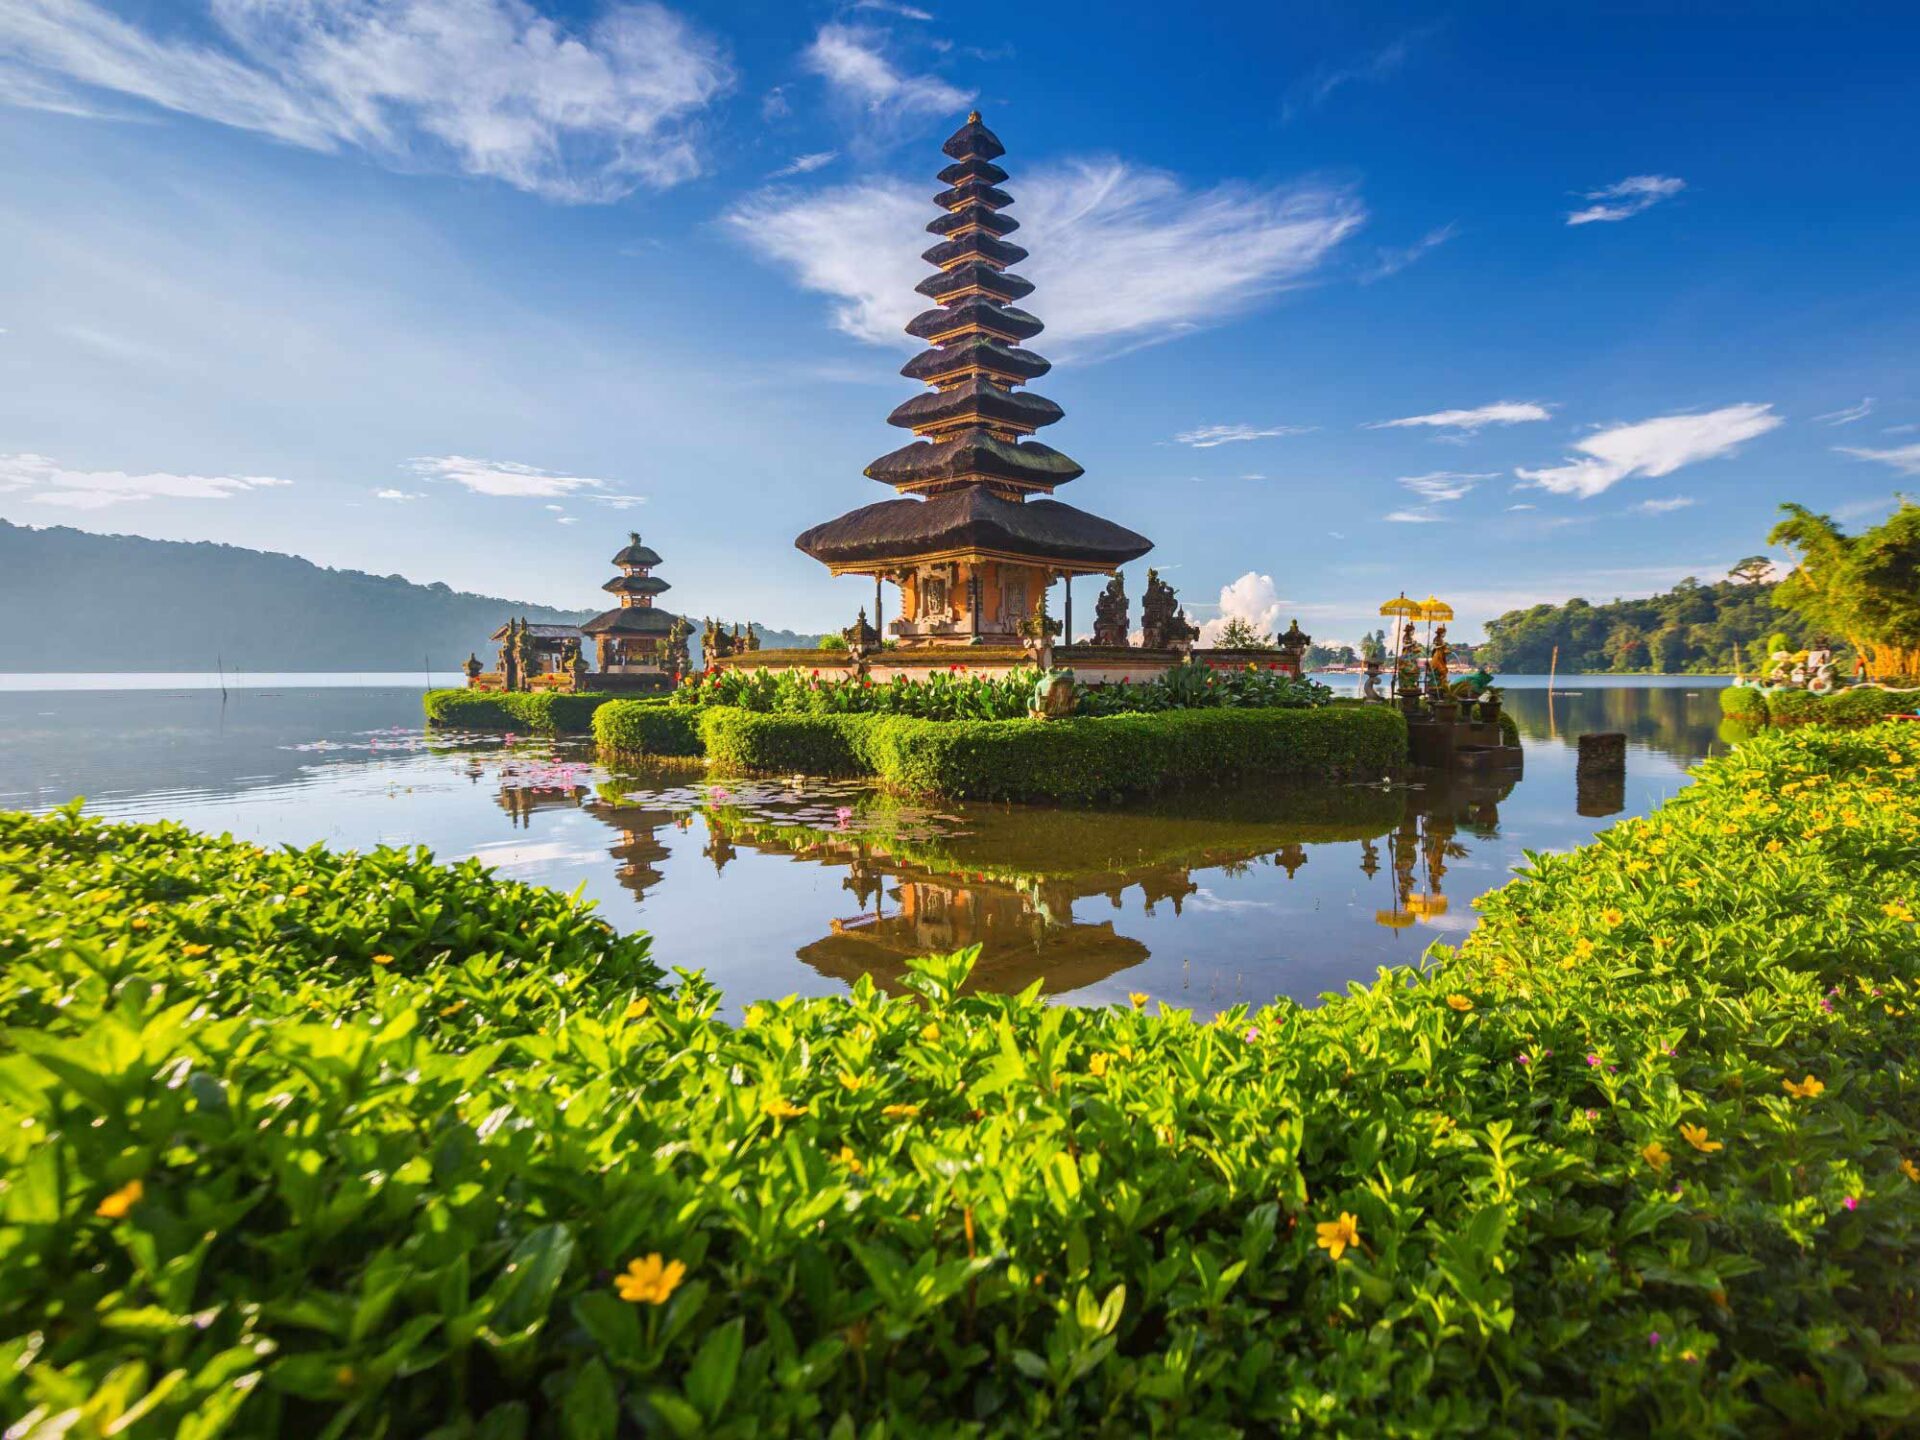 Best spring getaways from Dubai - Bali, Indonesia